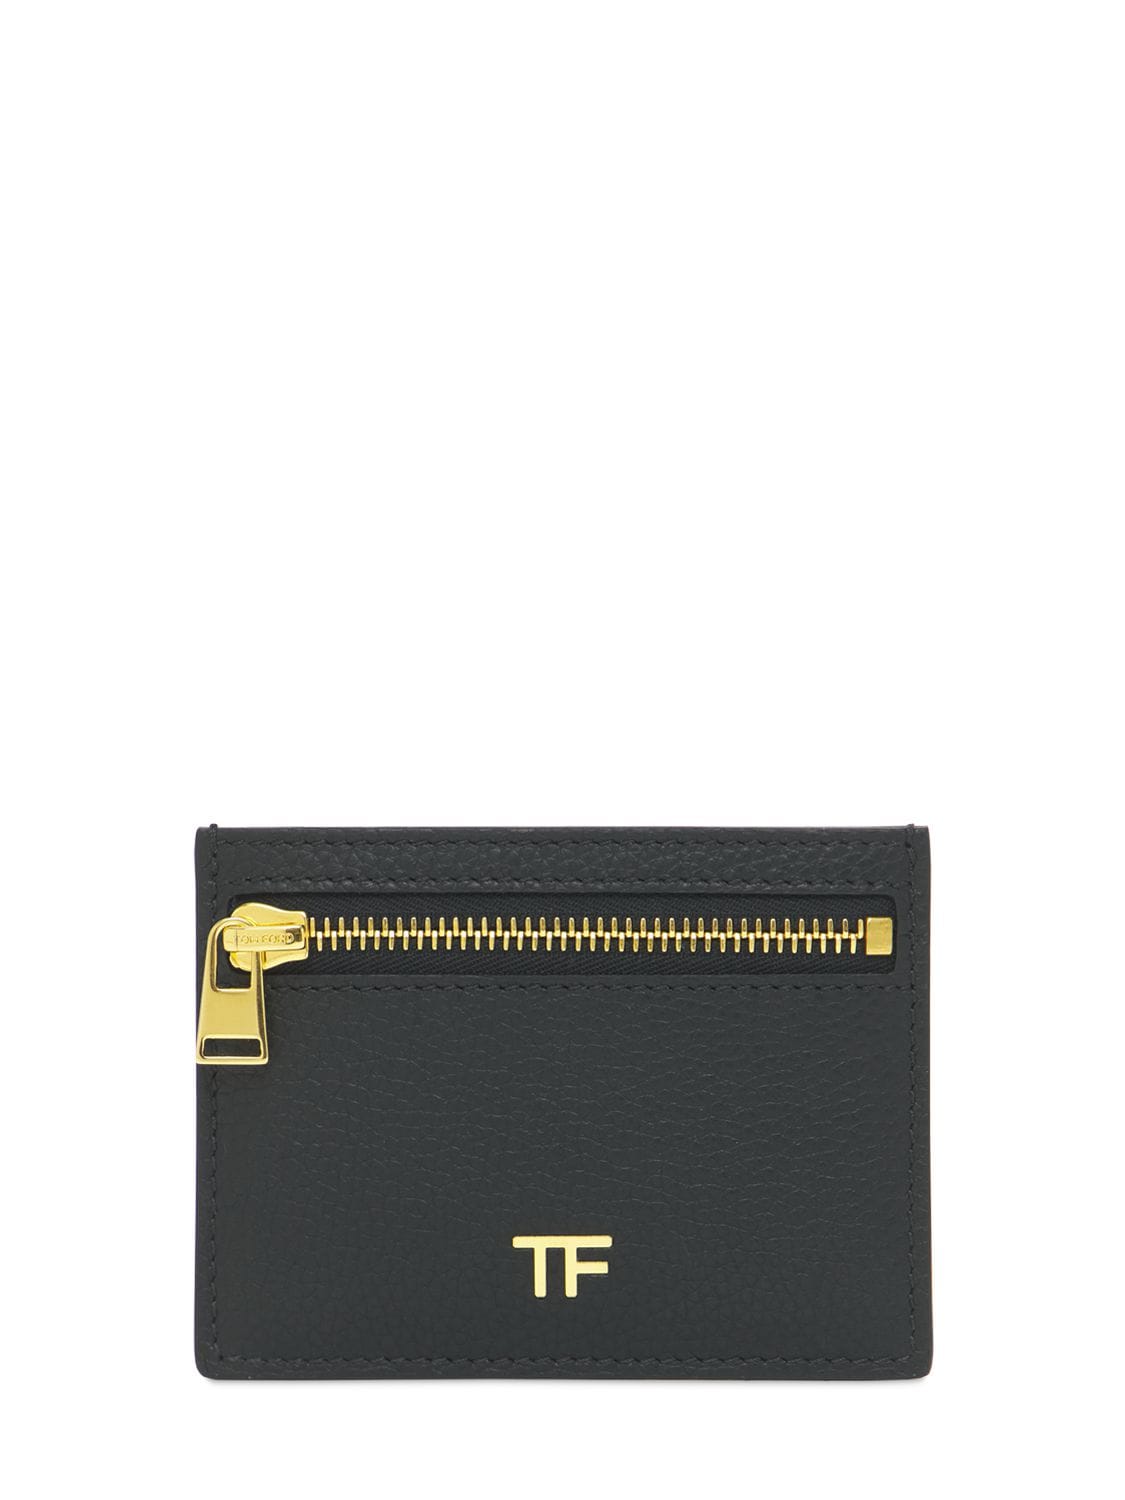 Image of Tf Leather Card Holder W/ Zipped Pocket